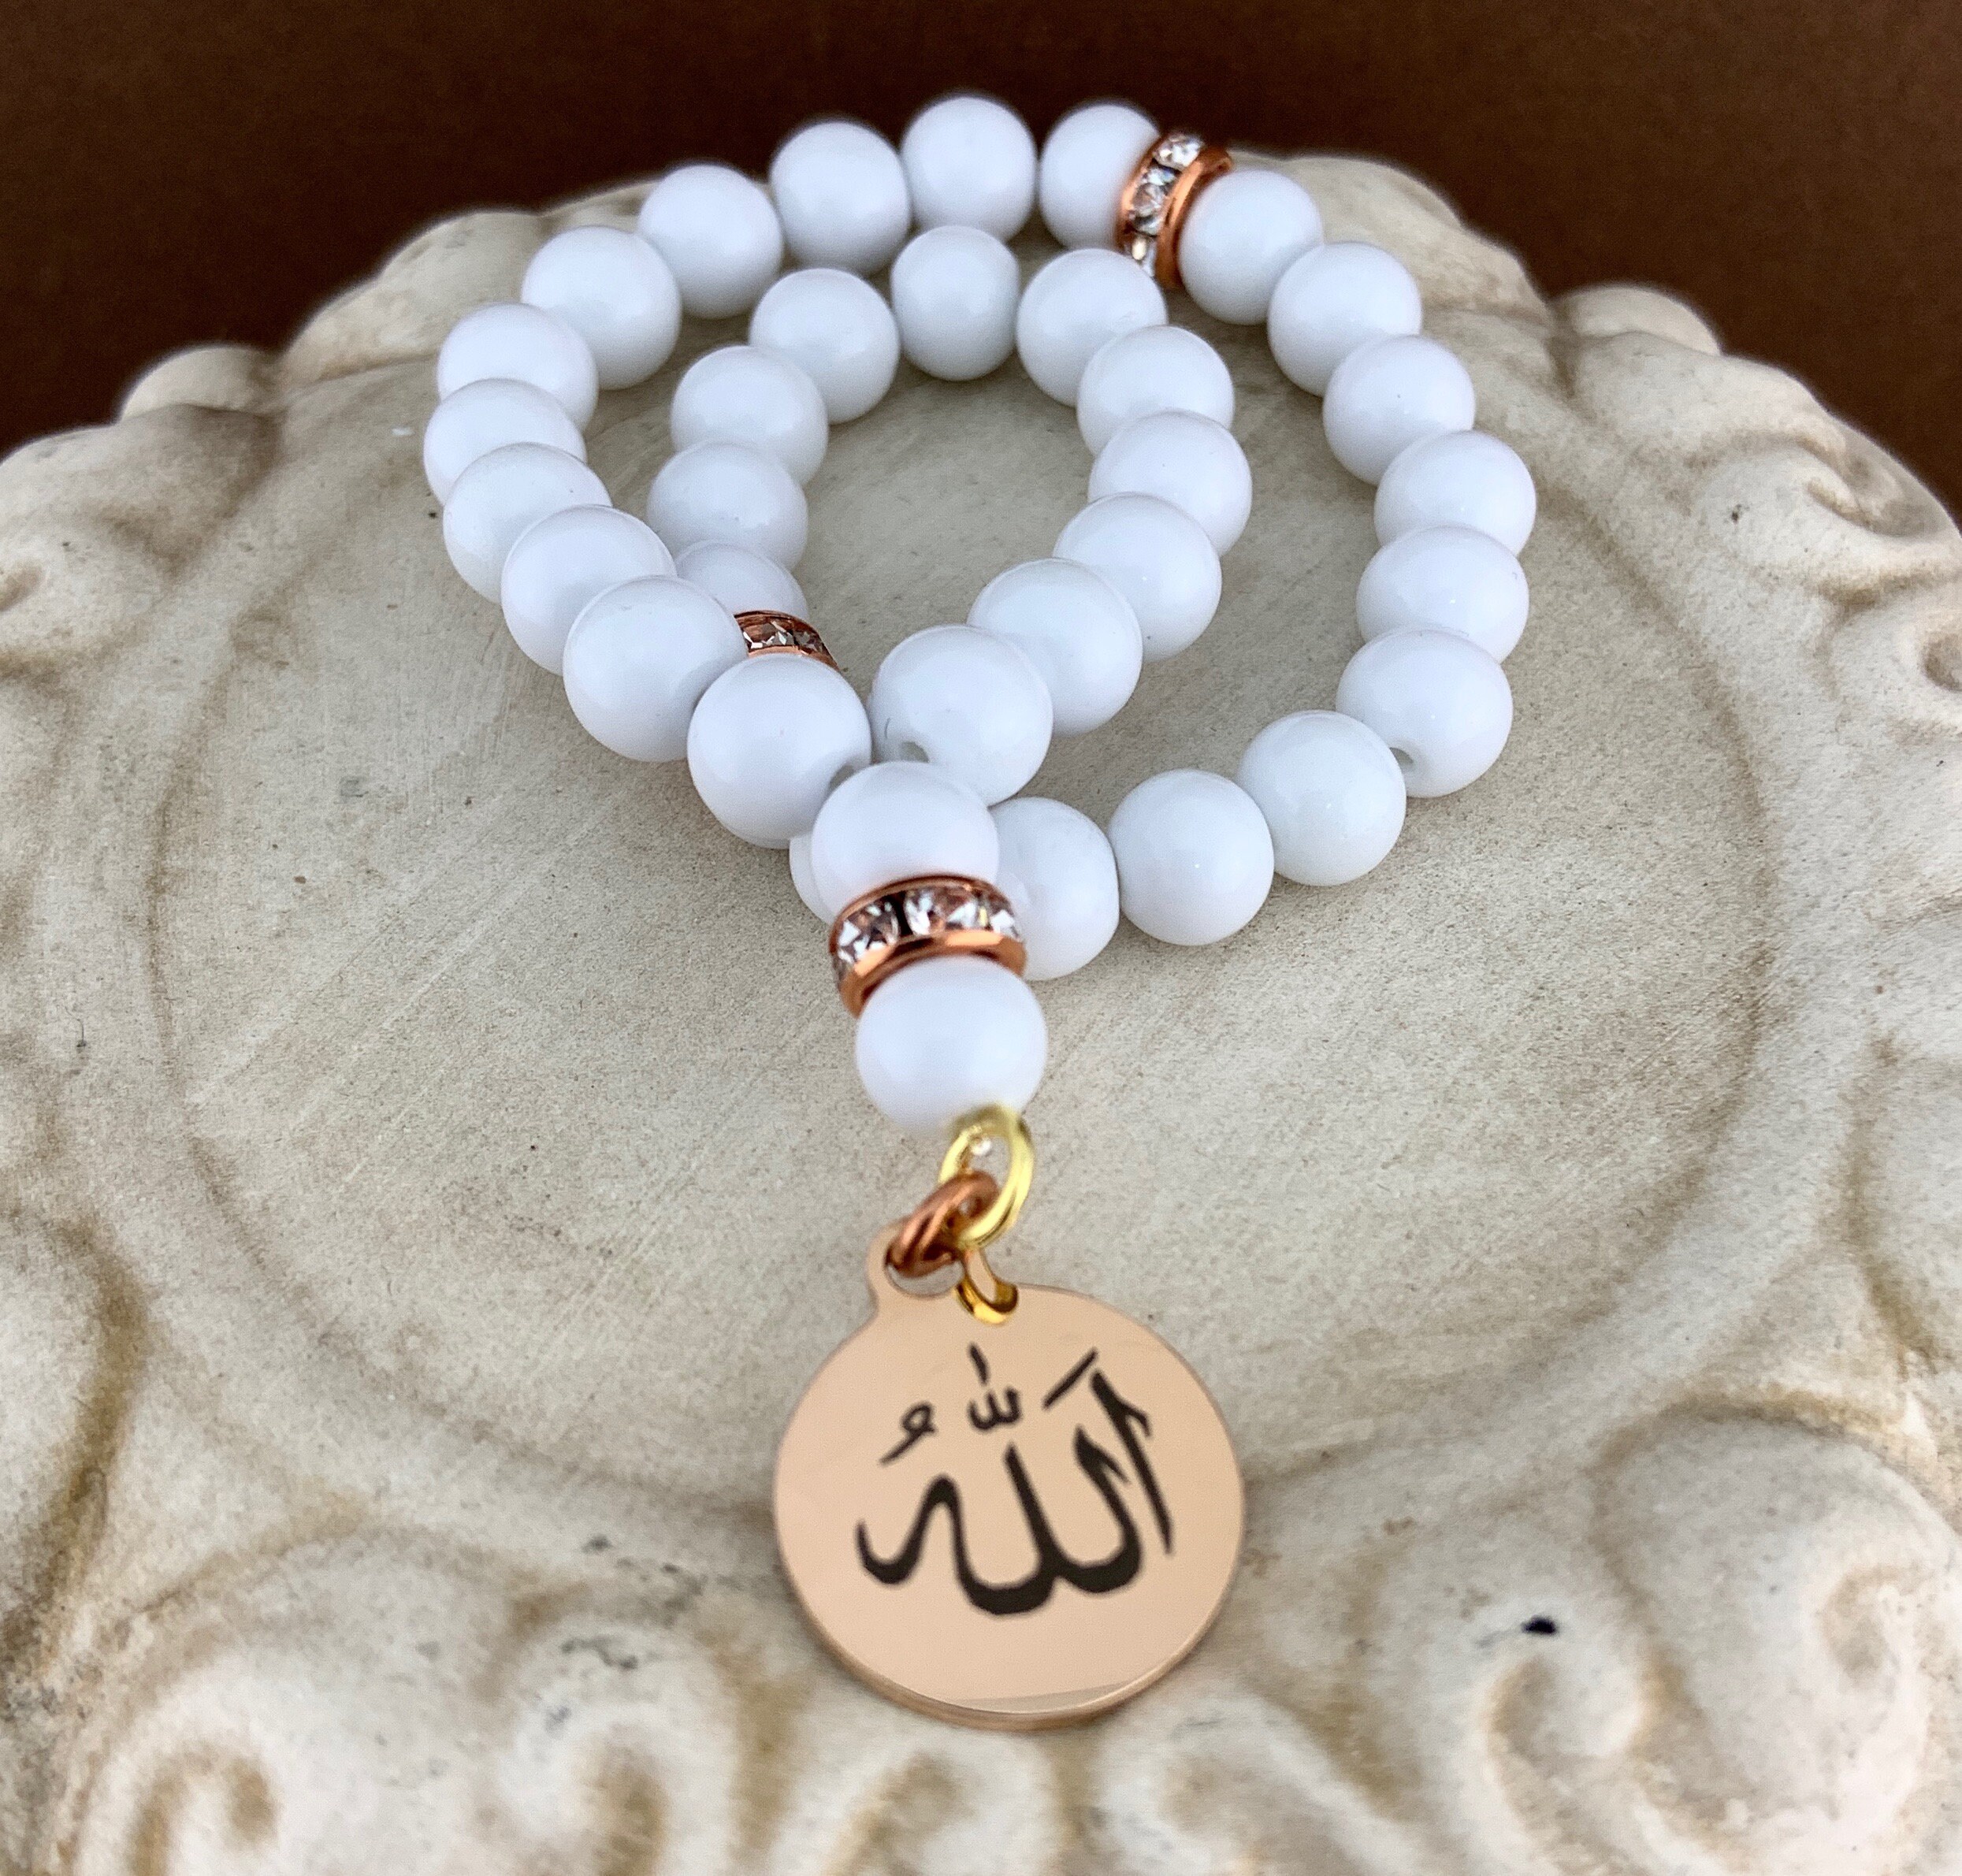 Pearly White - Large Bead Talib Tasbih Prayer Beads - The Islamic Place